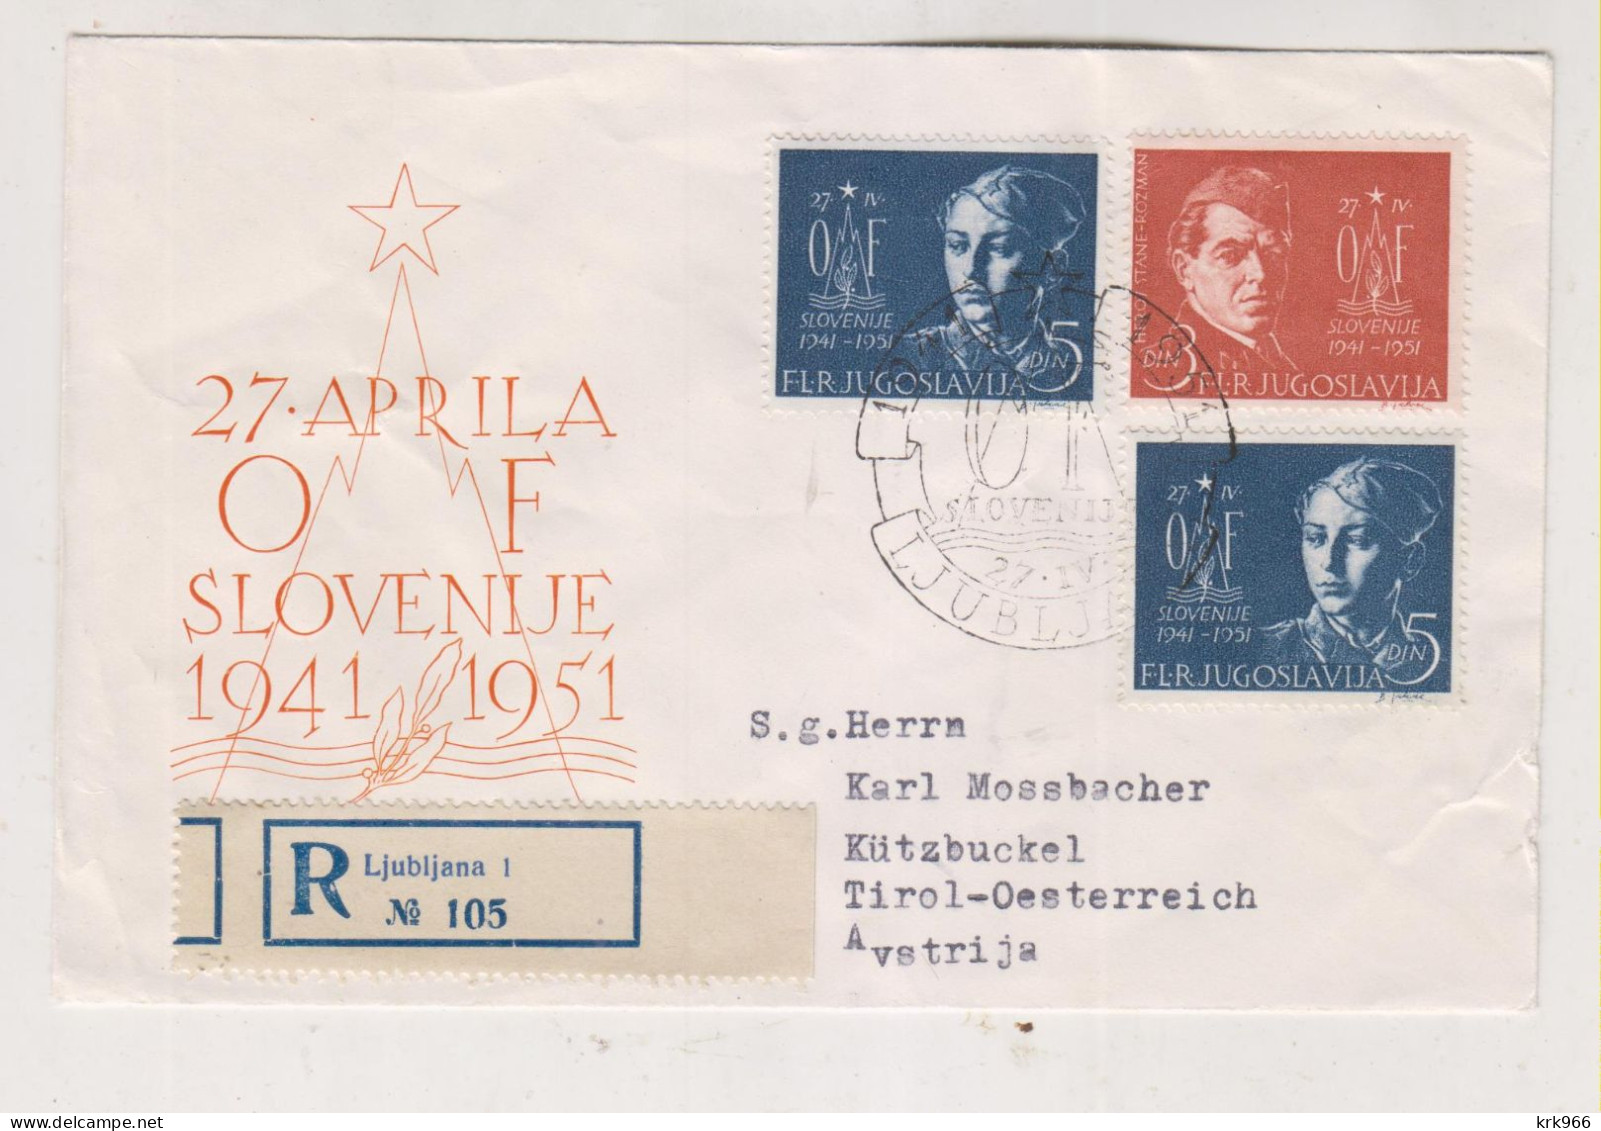 YUGOSLAVIA,1951 LJUBLJANA Nice Registered Cover To Austria - Covers & Documents